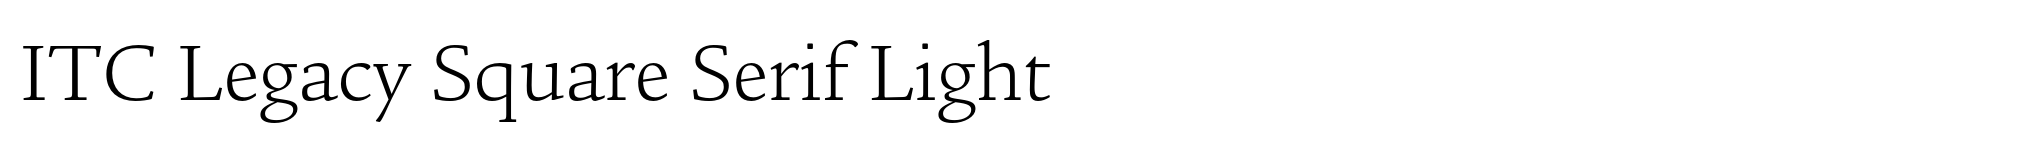 ITC Legacy Square Serif Light image